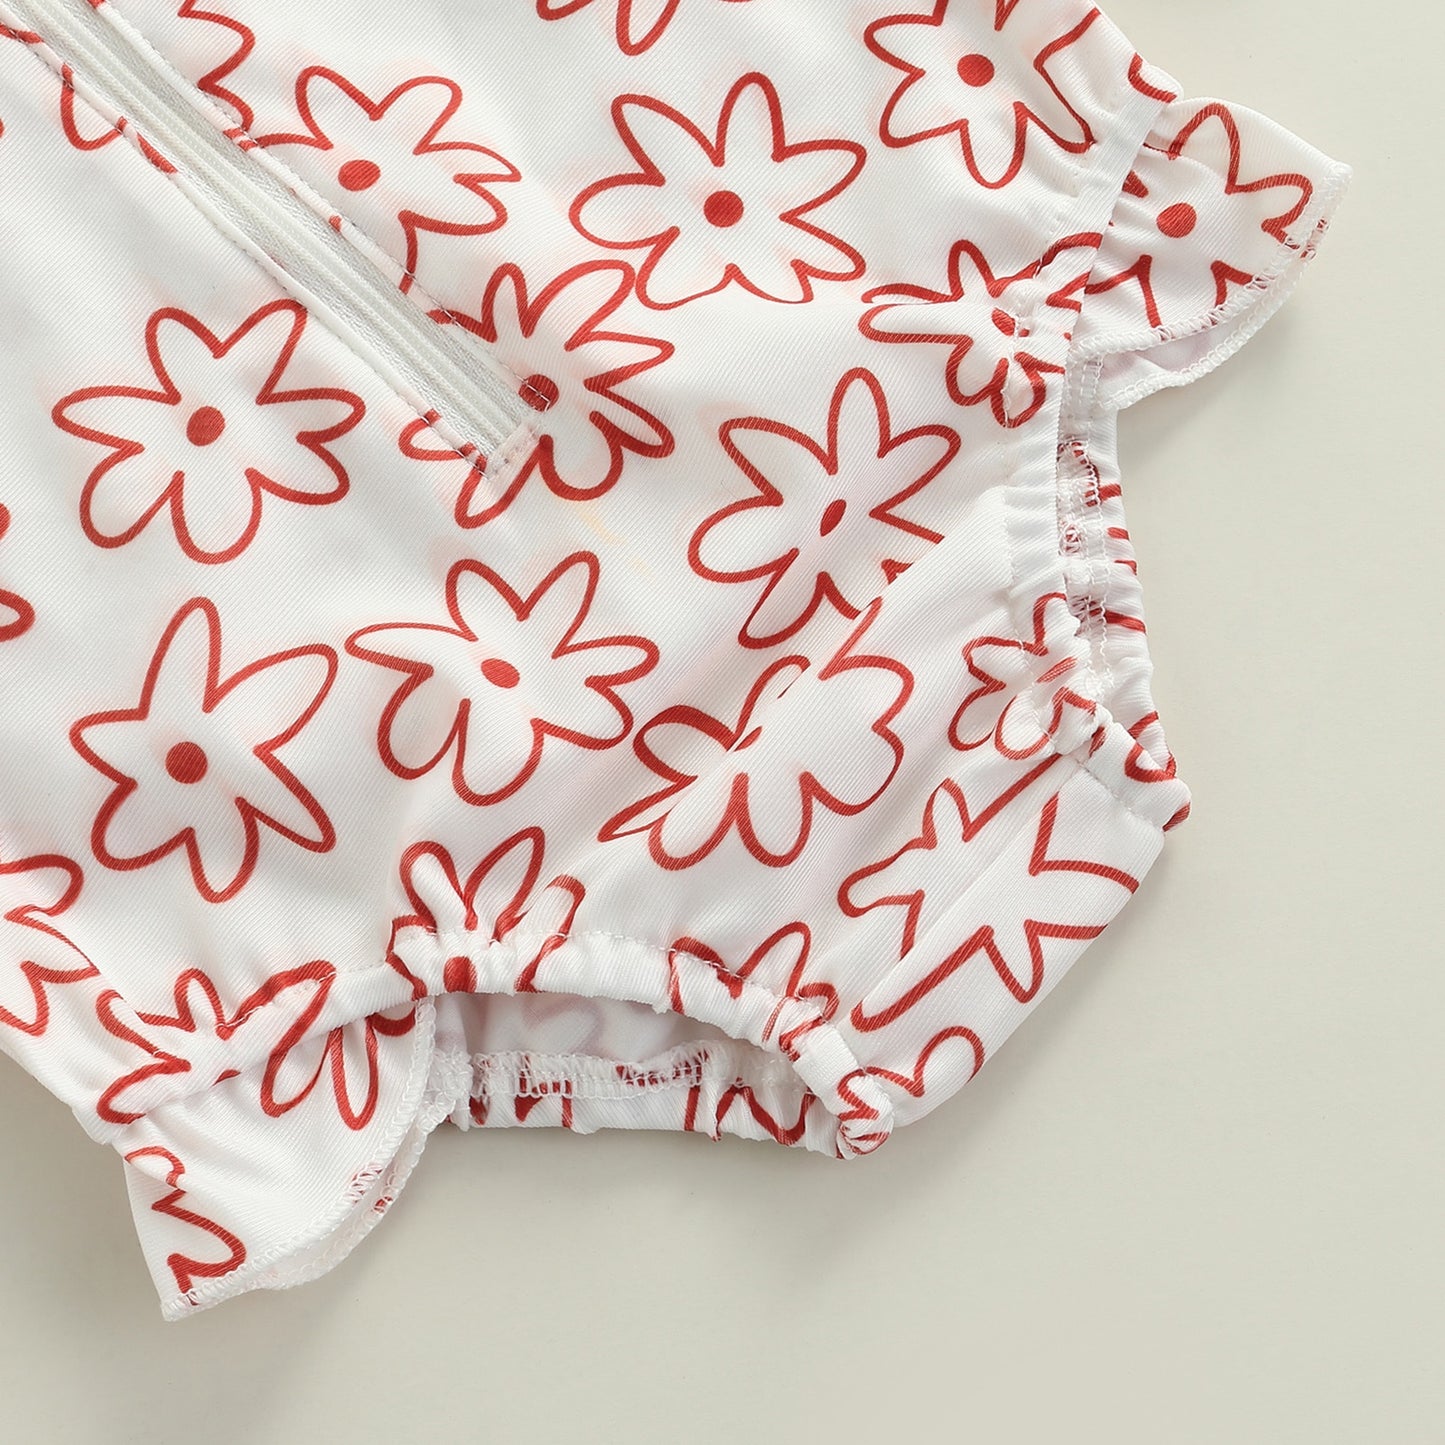 Baby & Toddler Girls Long Sleeve Swimwear Floral/ Rainbow Print Round Neck Zip Up Beachwear